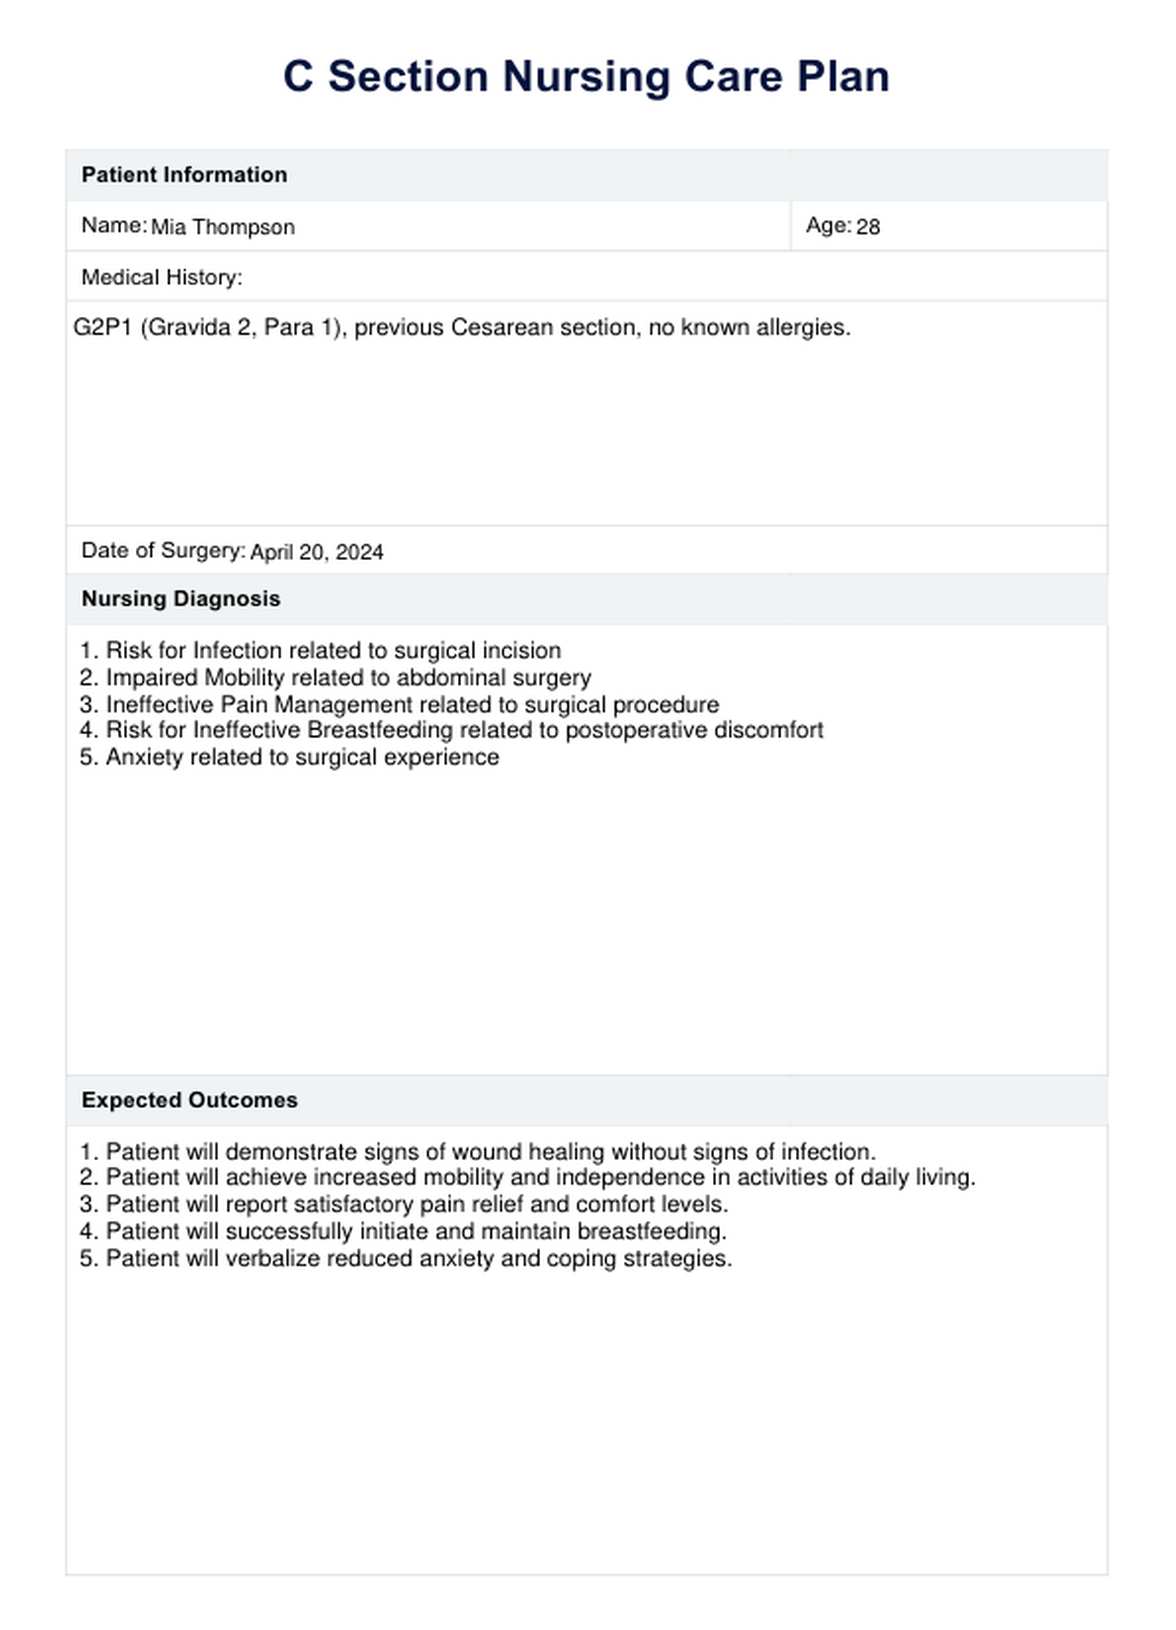 C Section Nursing Care Plan PDF Example